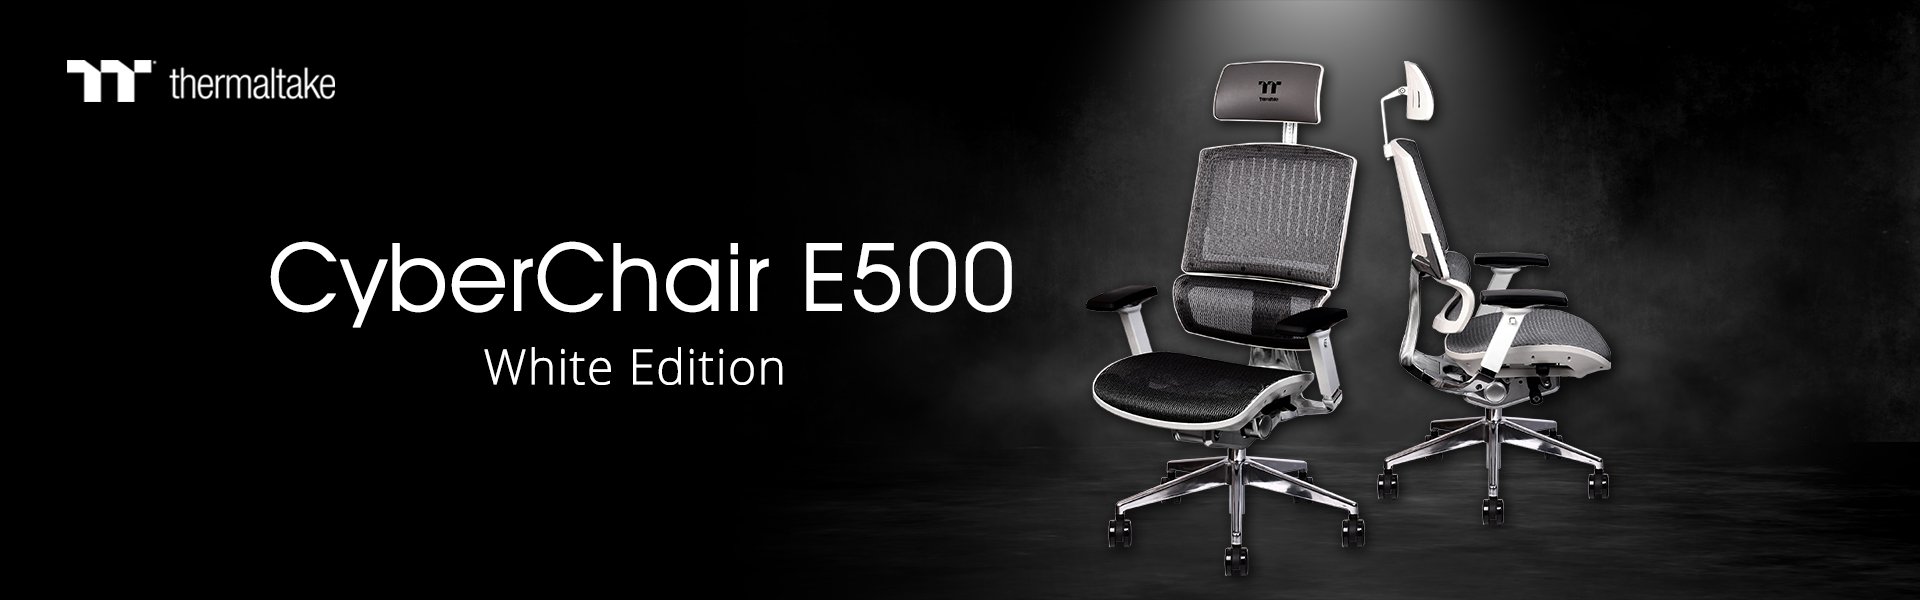 Thermaltake’s CyberChair E500 White Edition Ergonomic Chair